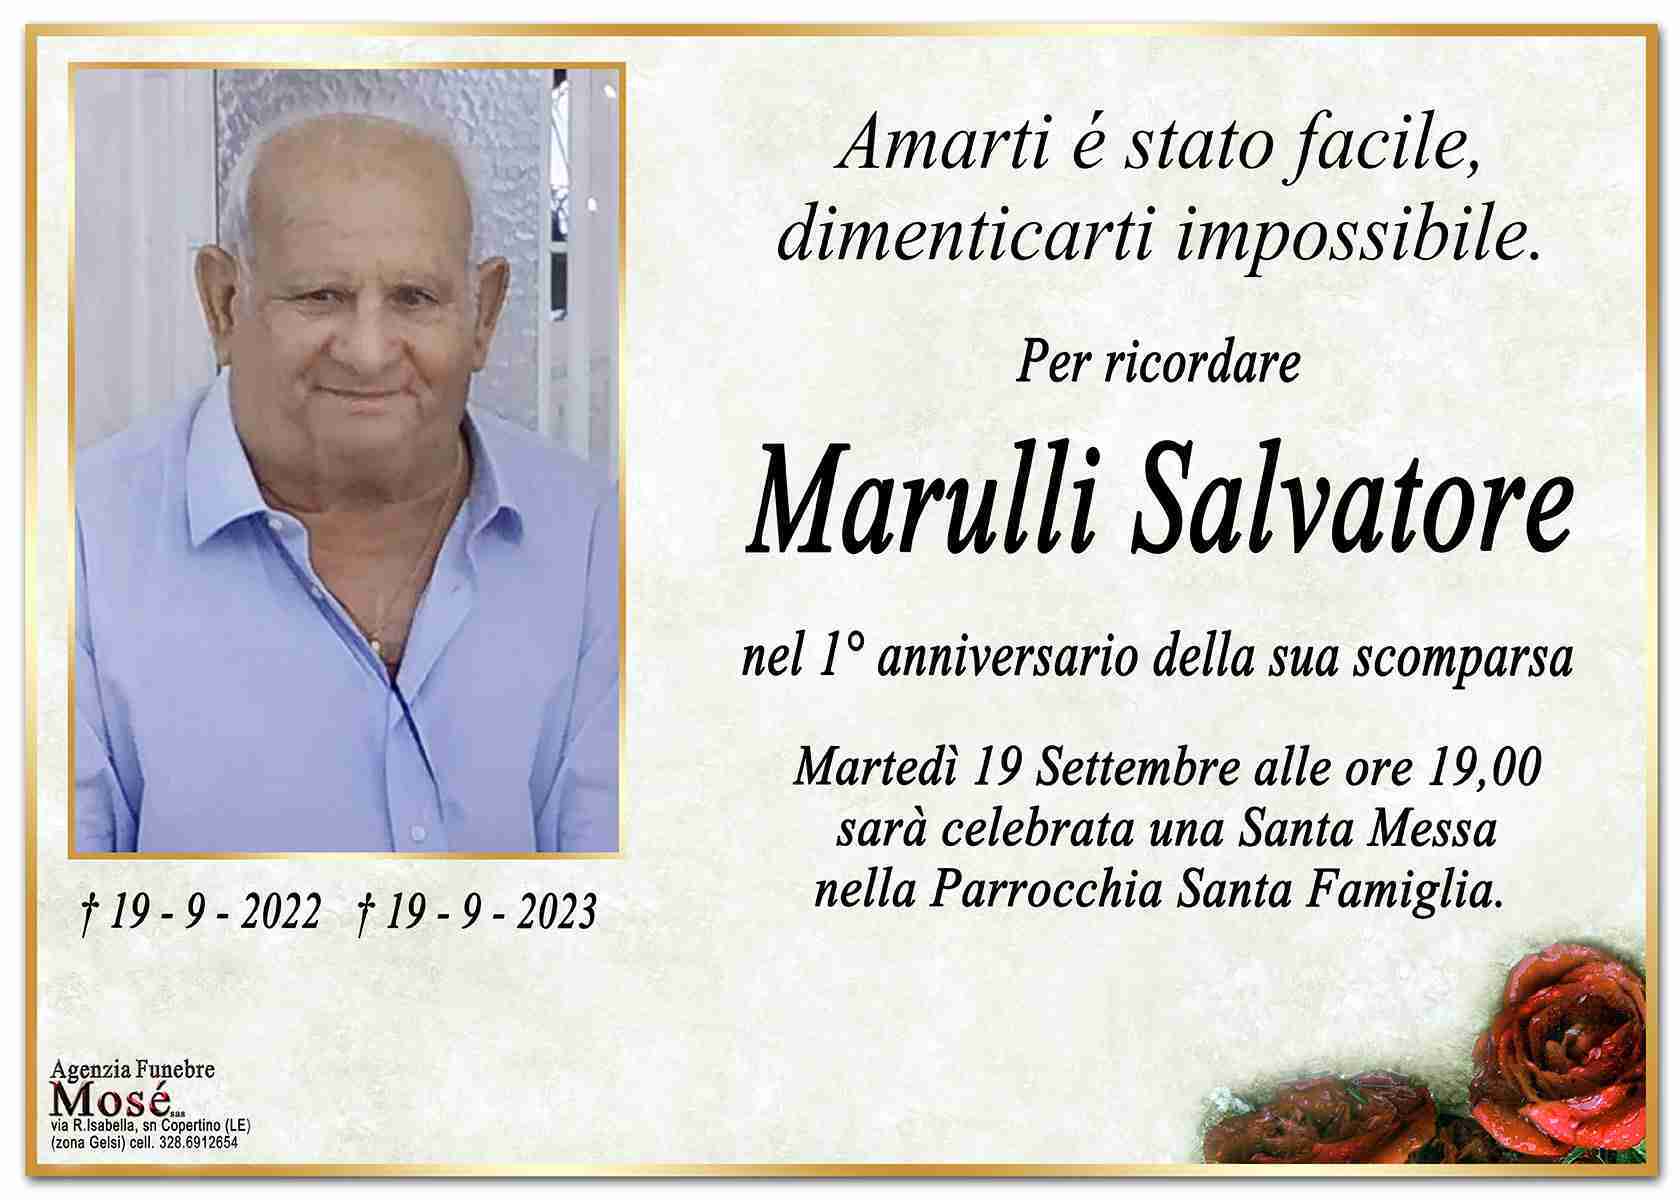 Salvatore Marulli